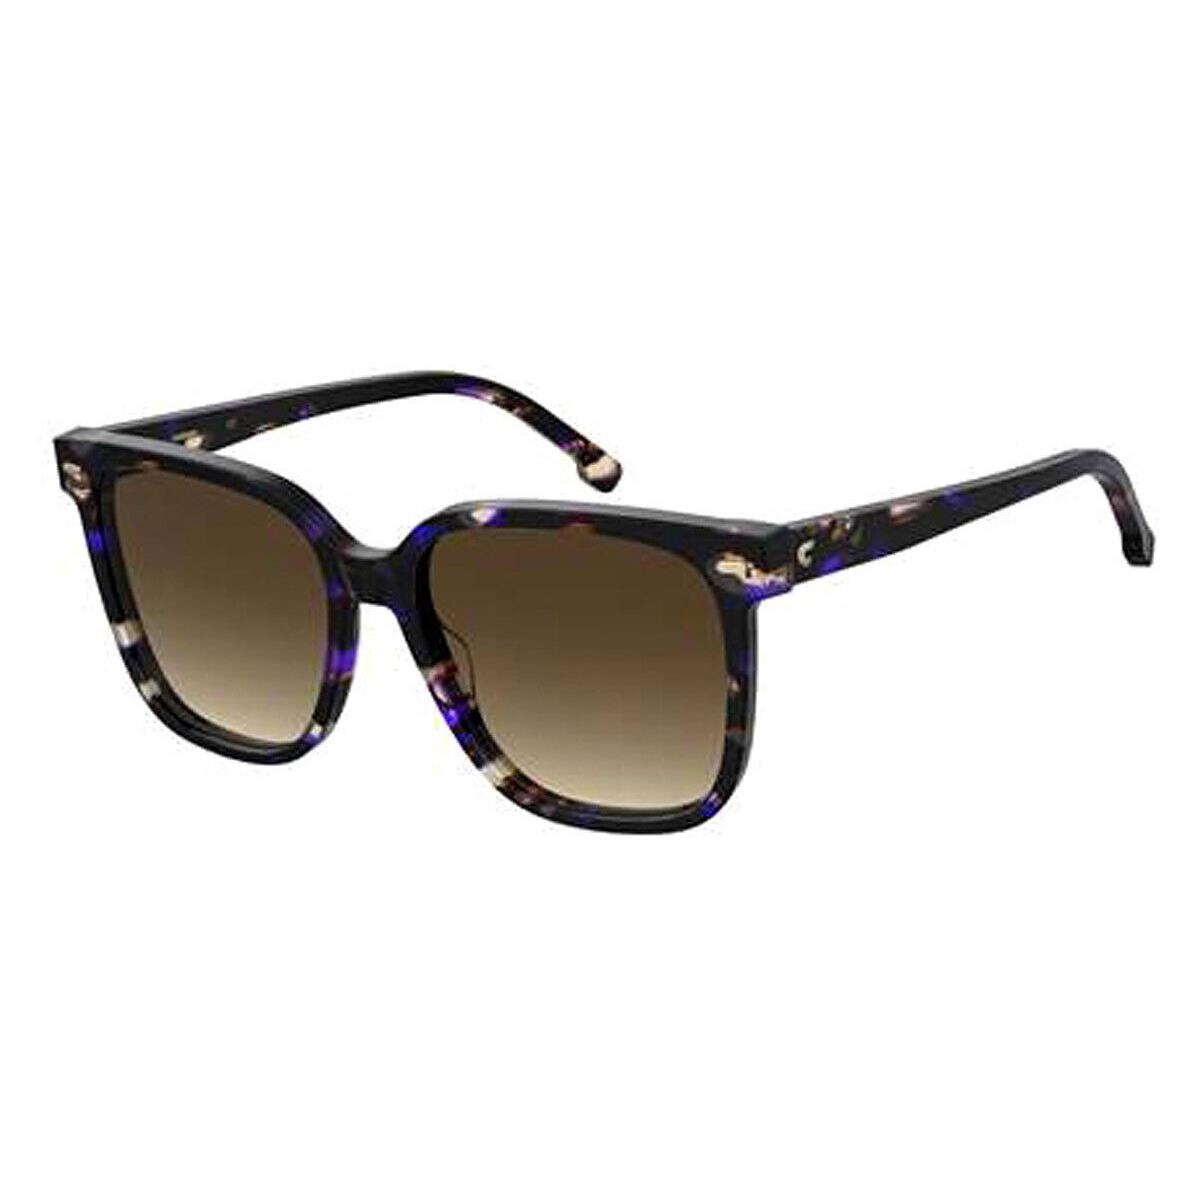 Carrera Car Sunglasses Violet Havana / Brown Gradient 55mm